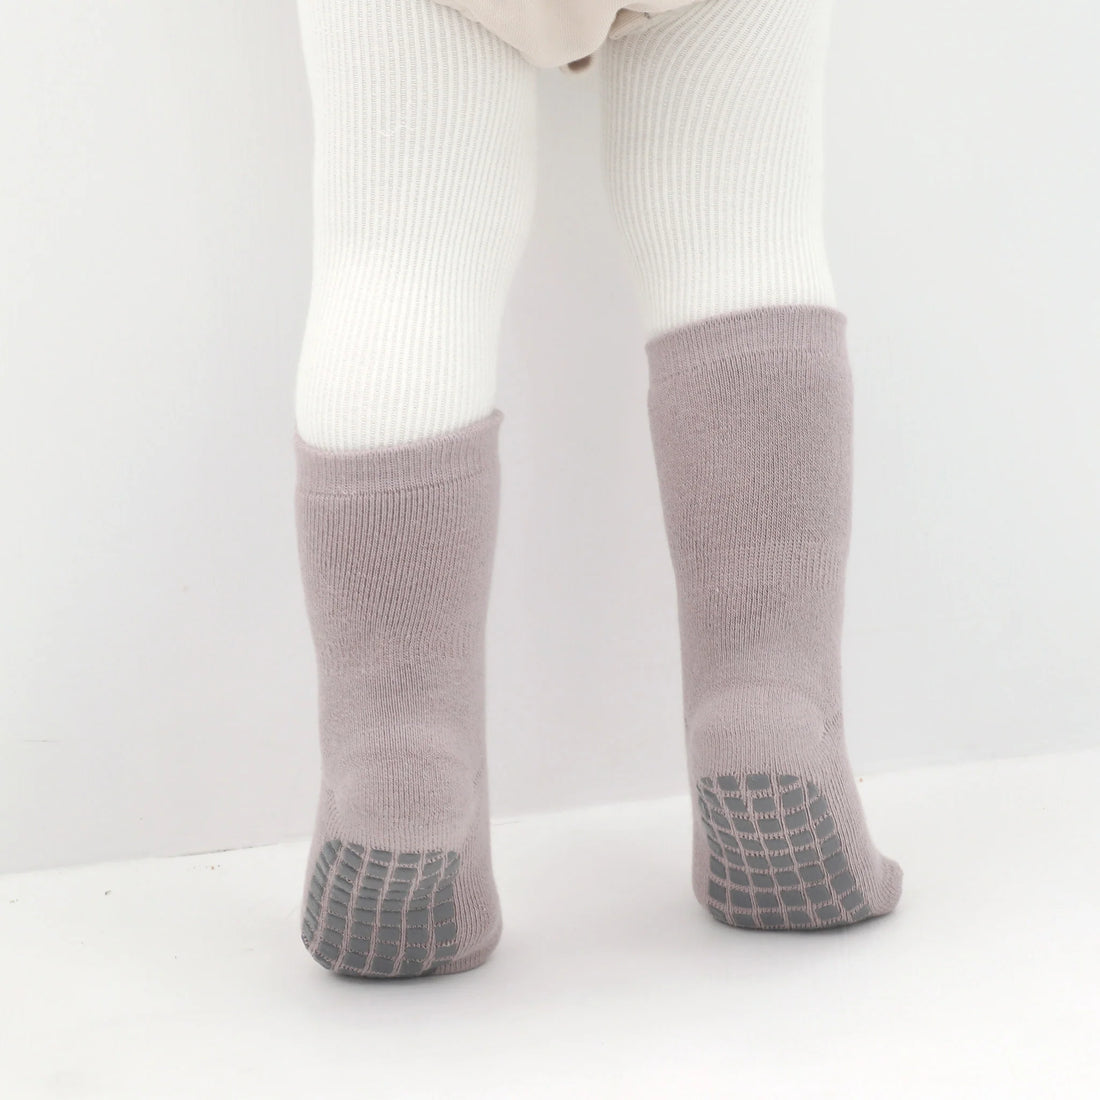 How do you make toddler socks grip?